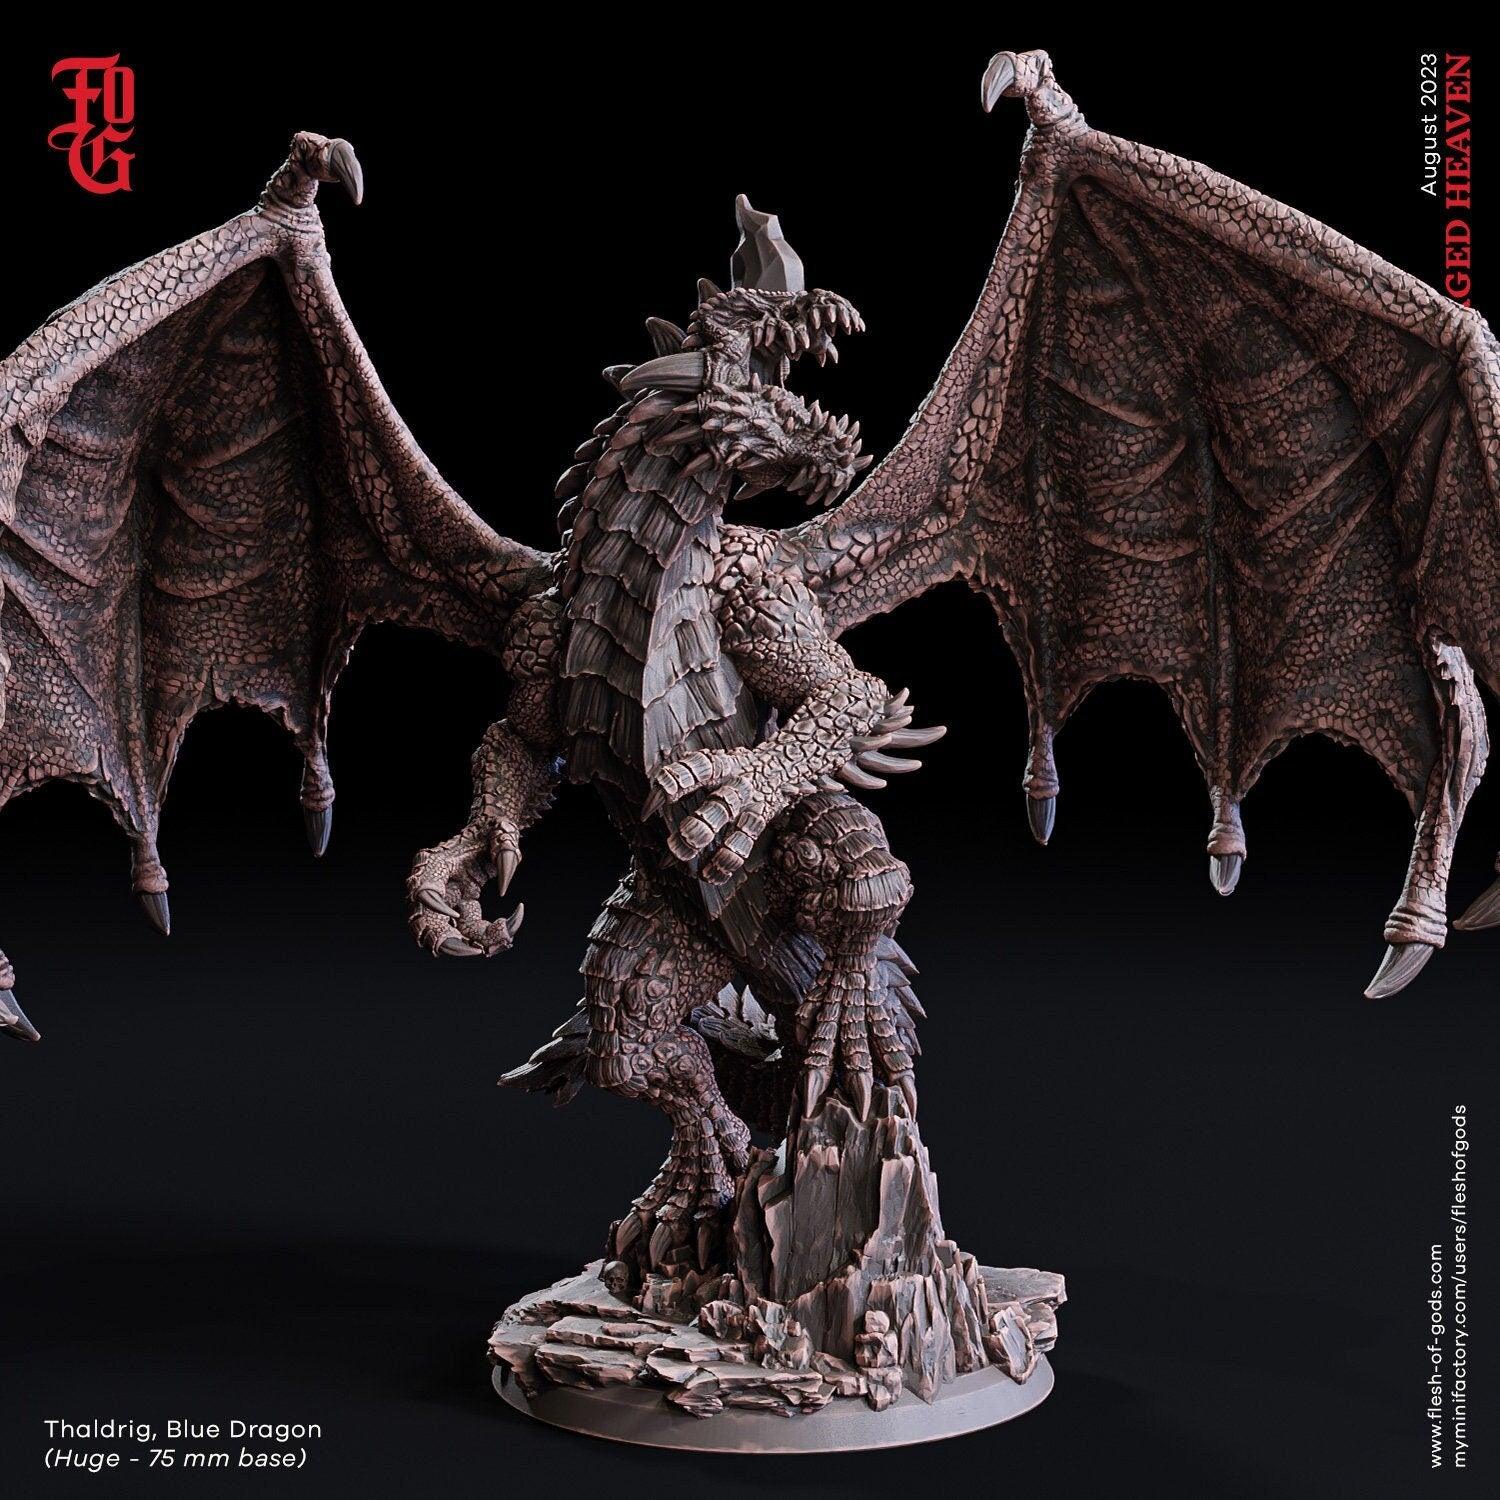 Thaldrig, Blue Dragon Miniature | Huge Boss Monster for Epic DnD Adventures | 75mm Base - Plague Miniatures shop for DnD Miniatures